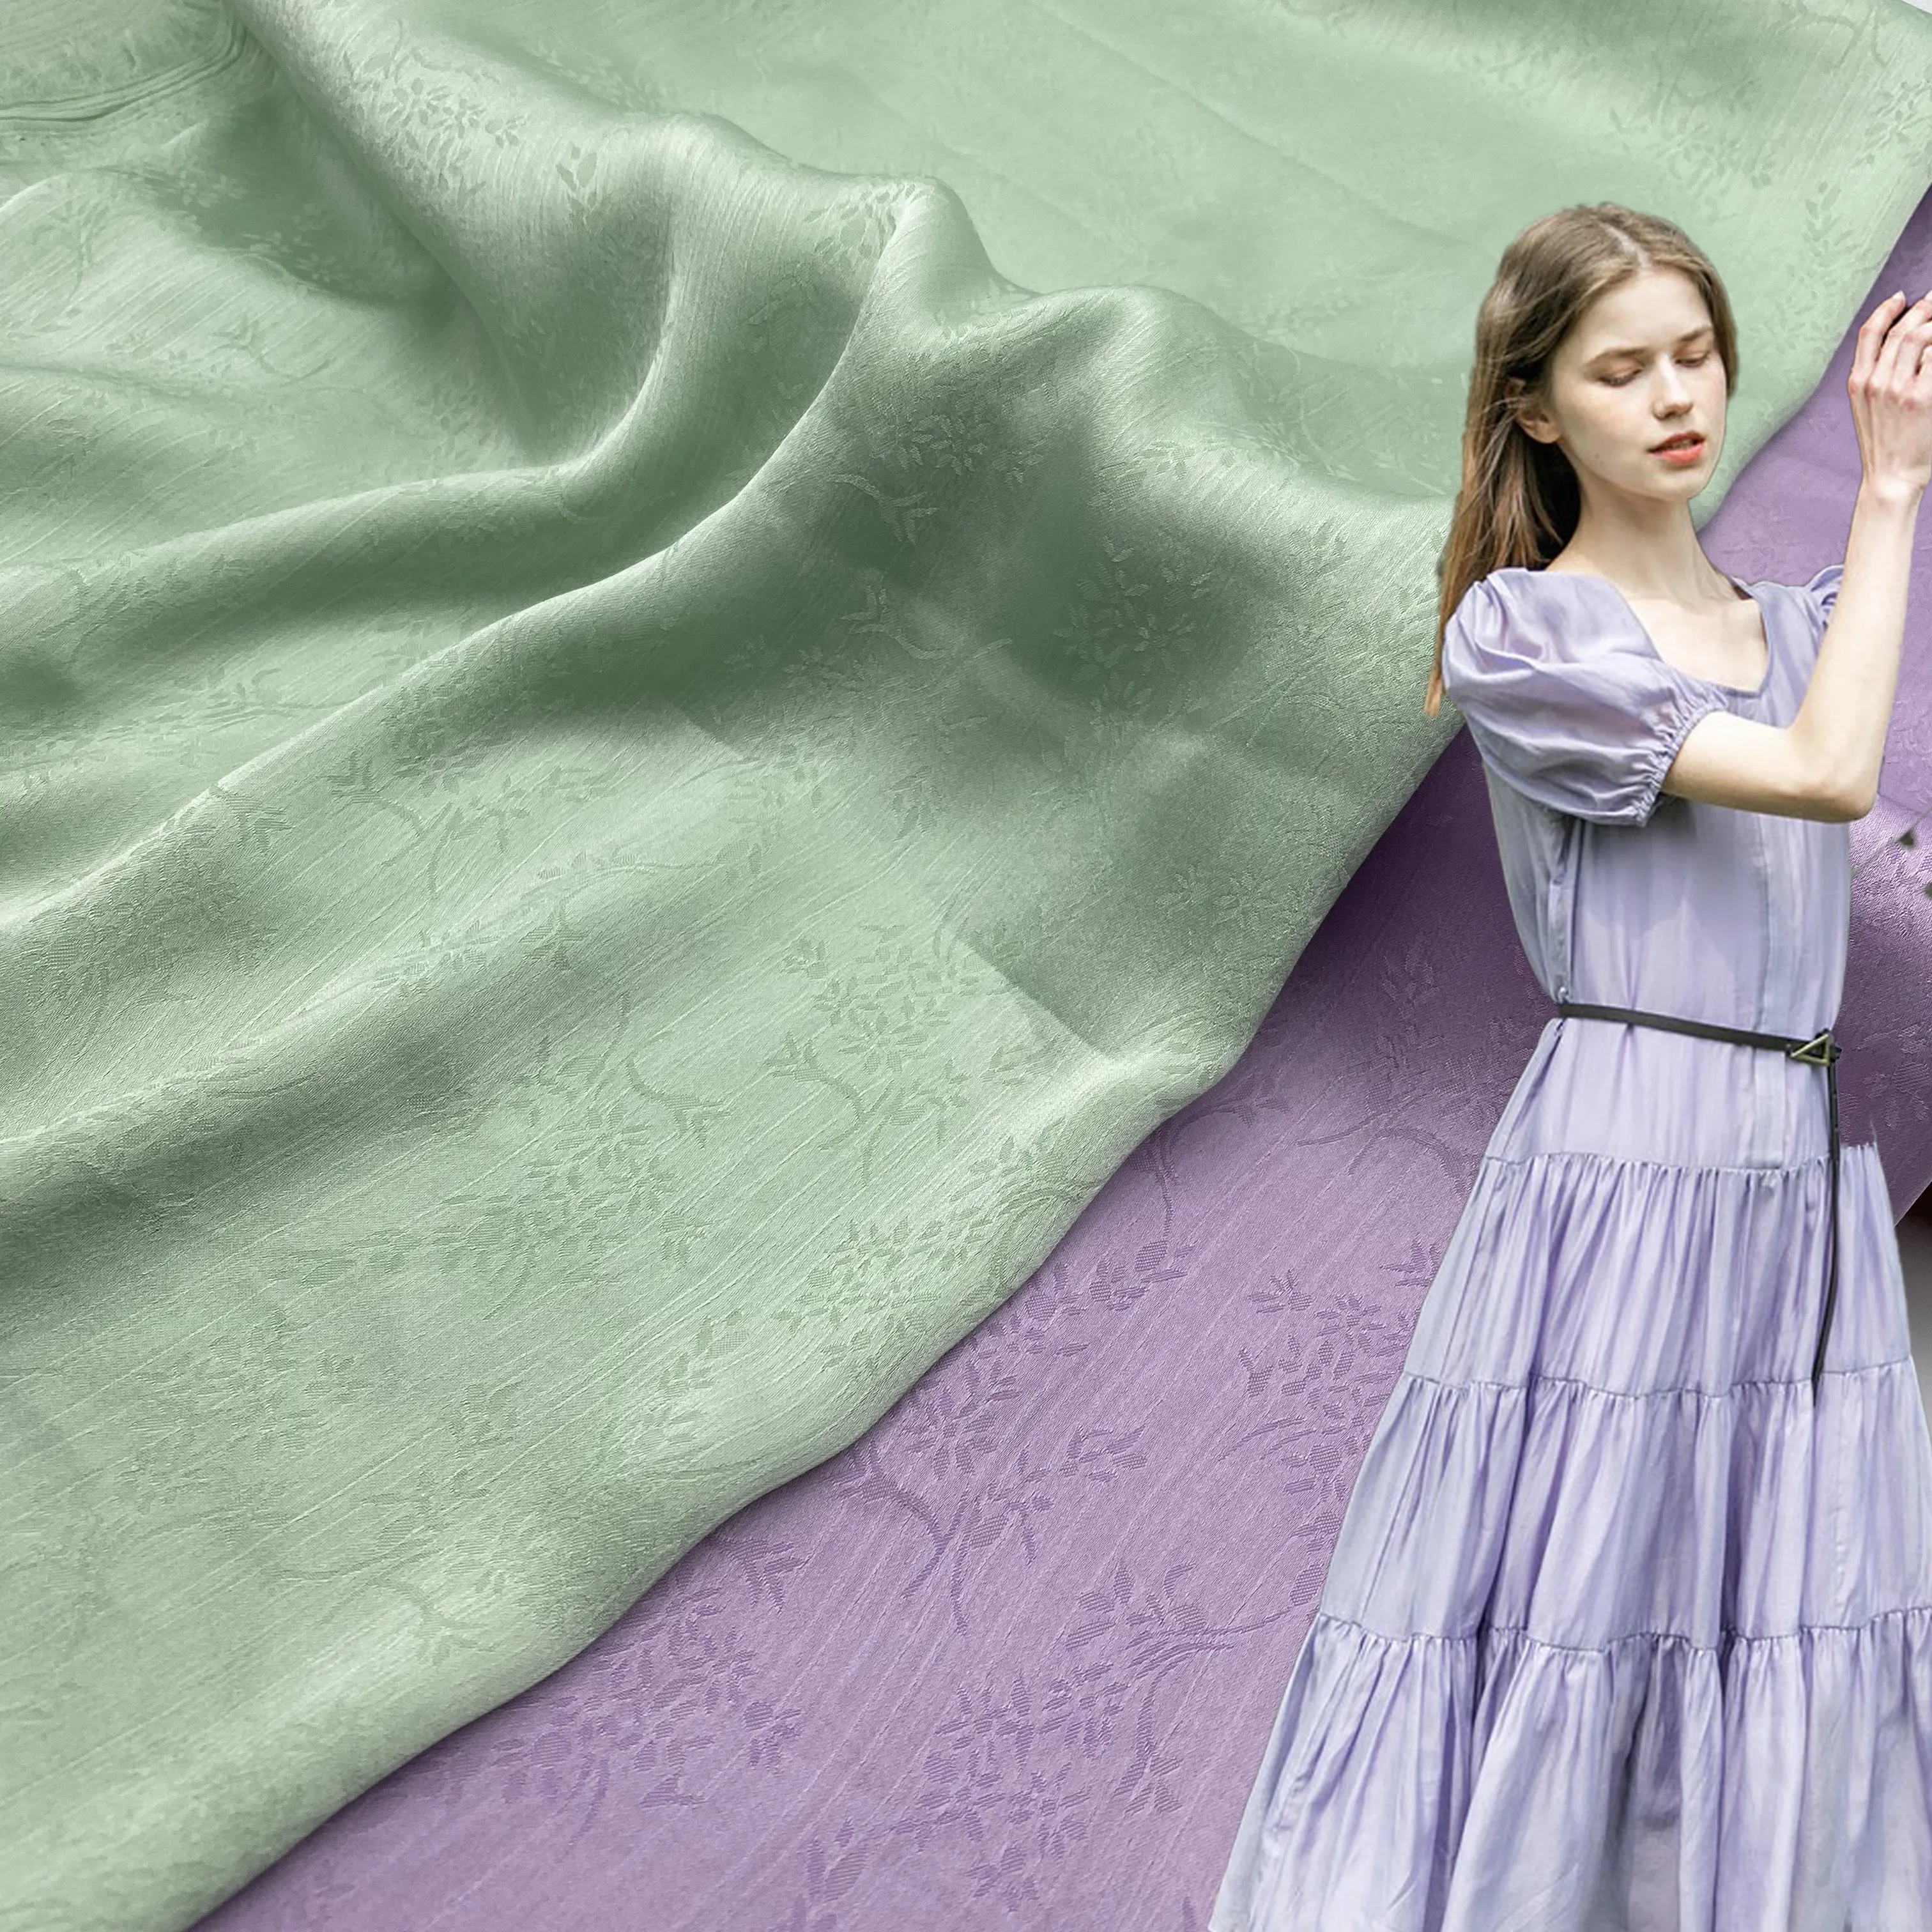 Tecidos texturizados de poliéster 100%, tecido jacquard chiffon crinkle chiffon tecidos para roupas de vestido